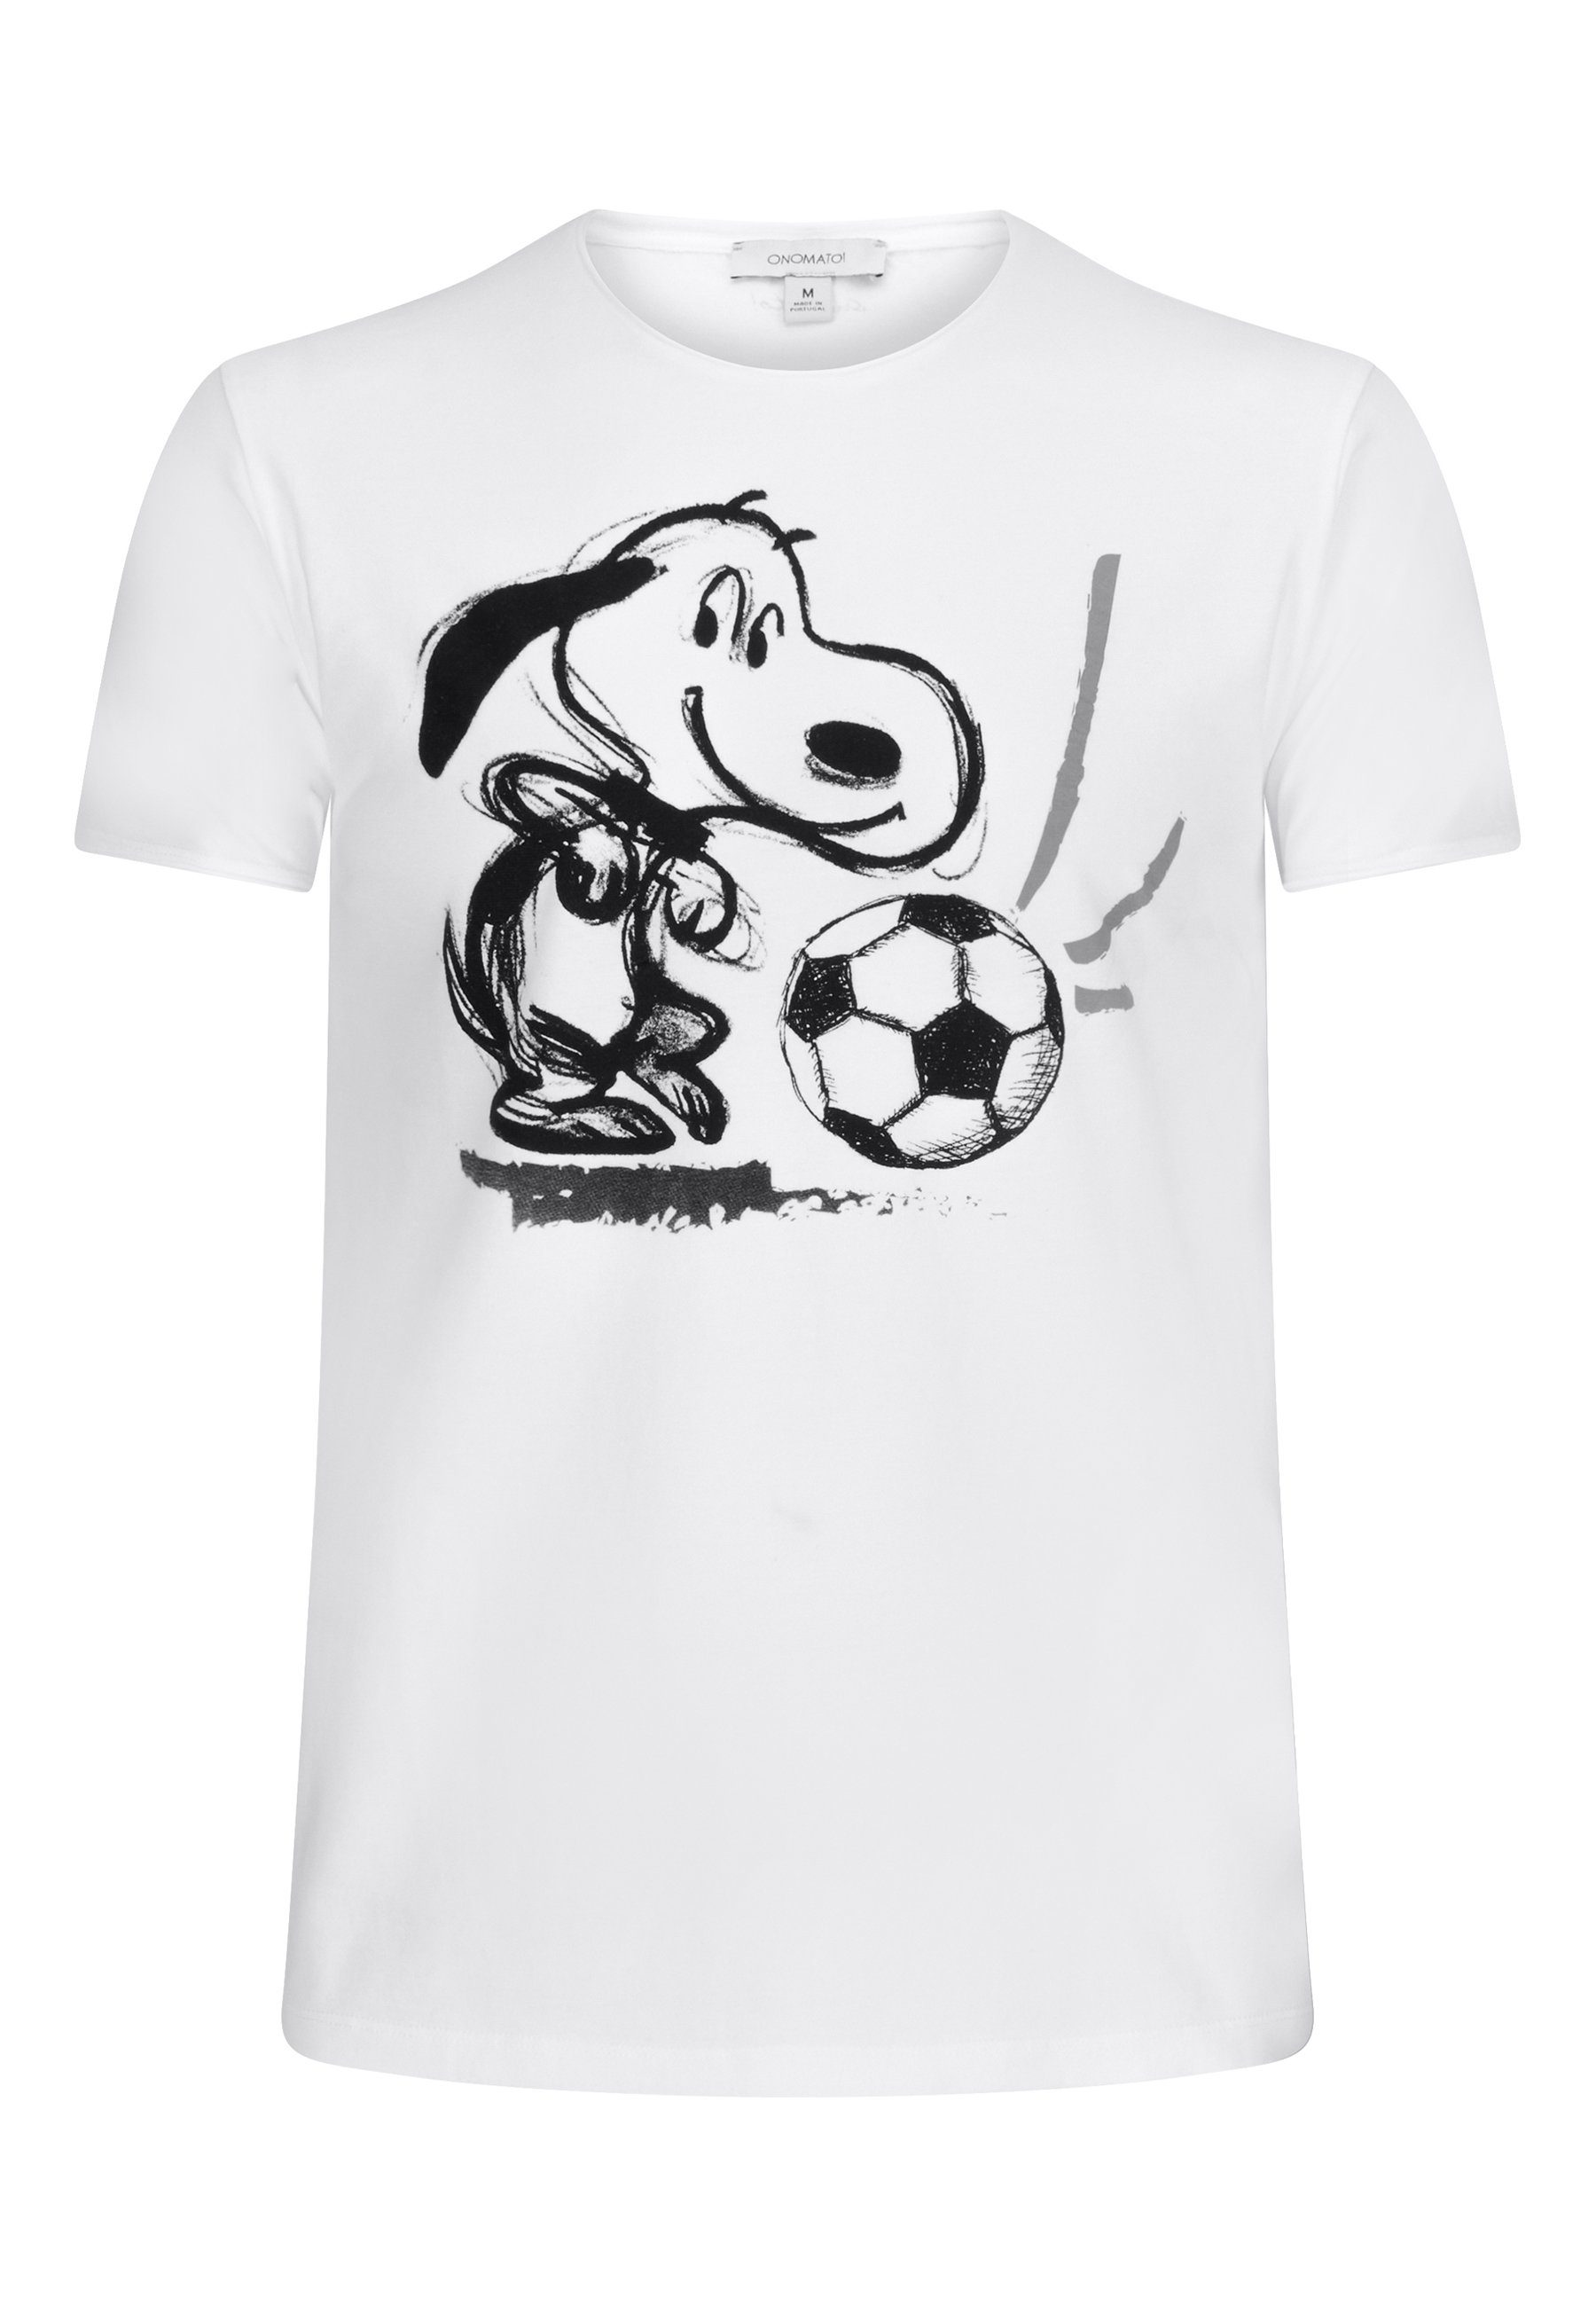 ONOMATO! T-Shirt Peanuts Snoopy Fussball Herren T-Shirt Kurzarm-Shirt